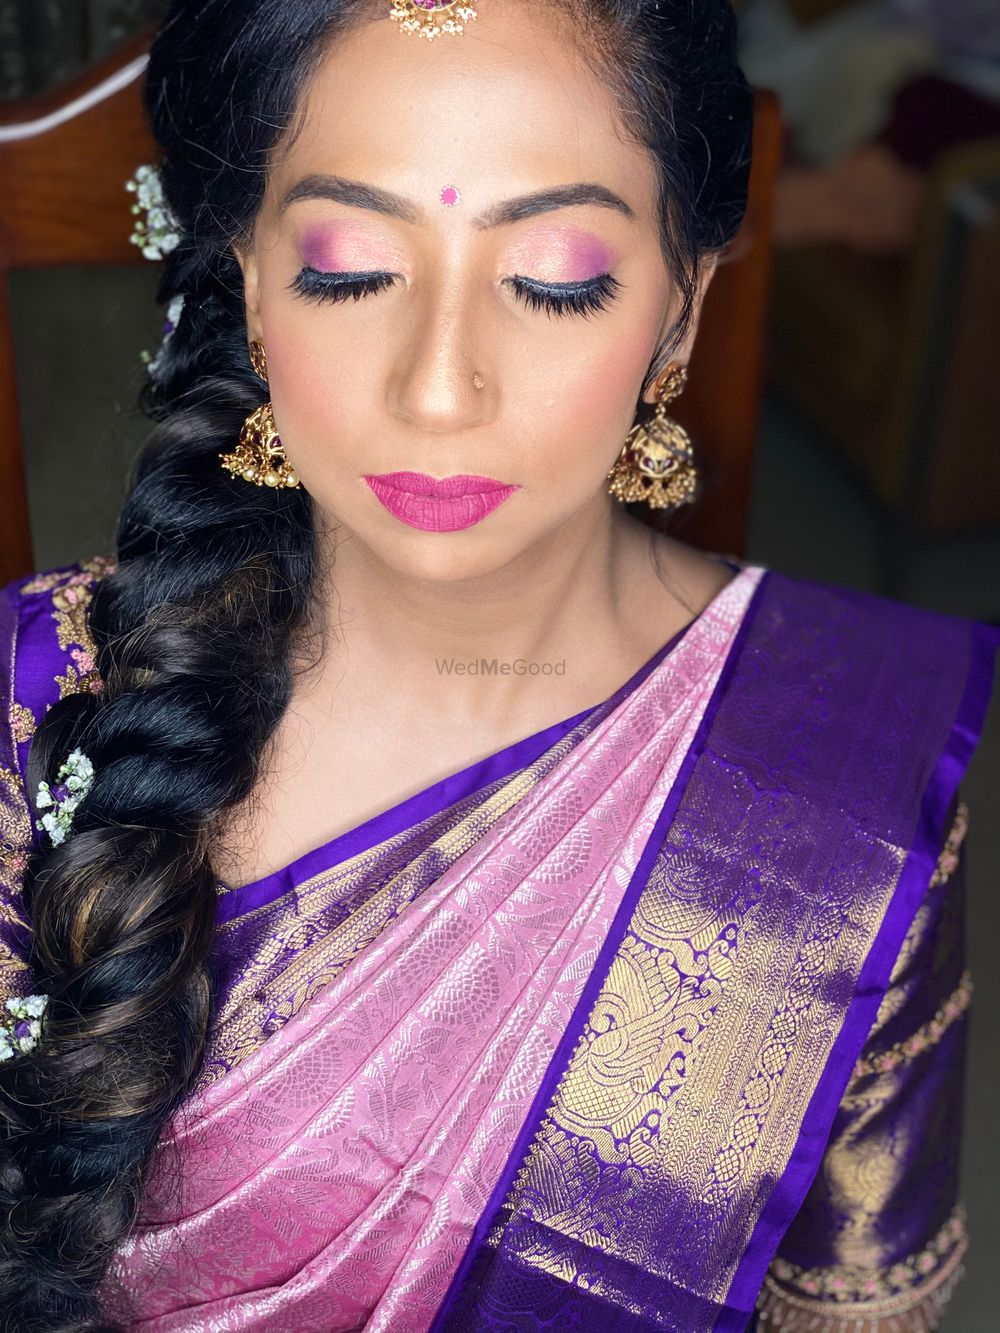 Photo By Makeup by Deepa Megnath - Bridal Makeup